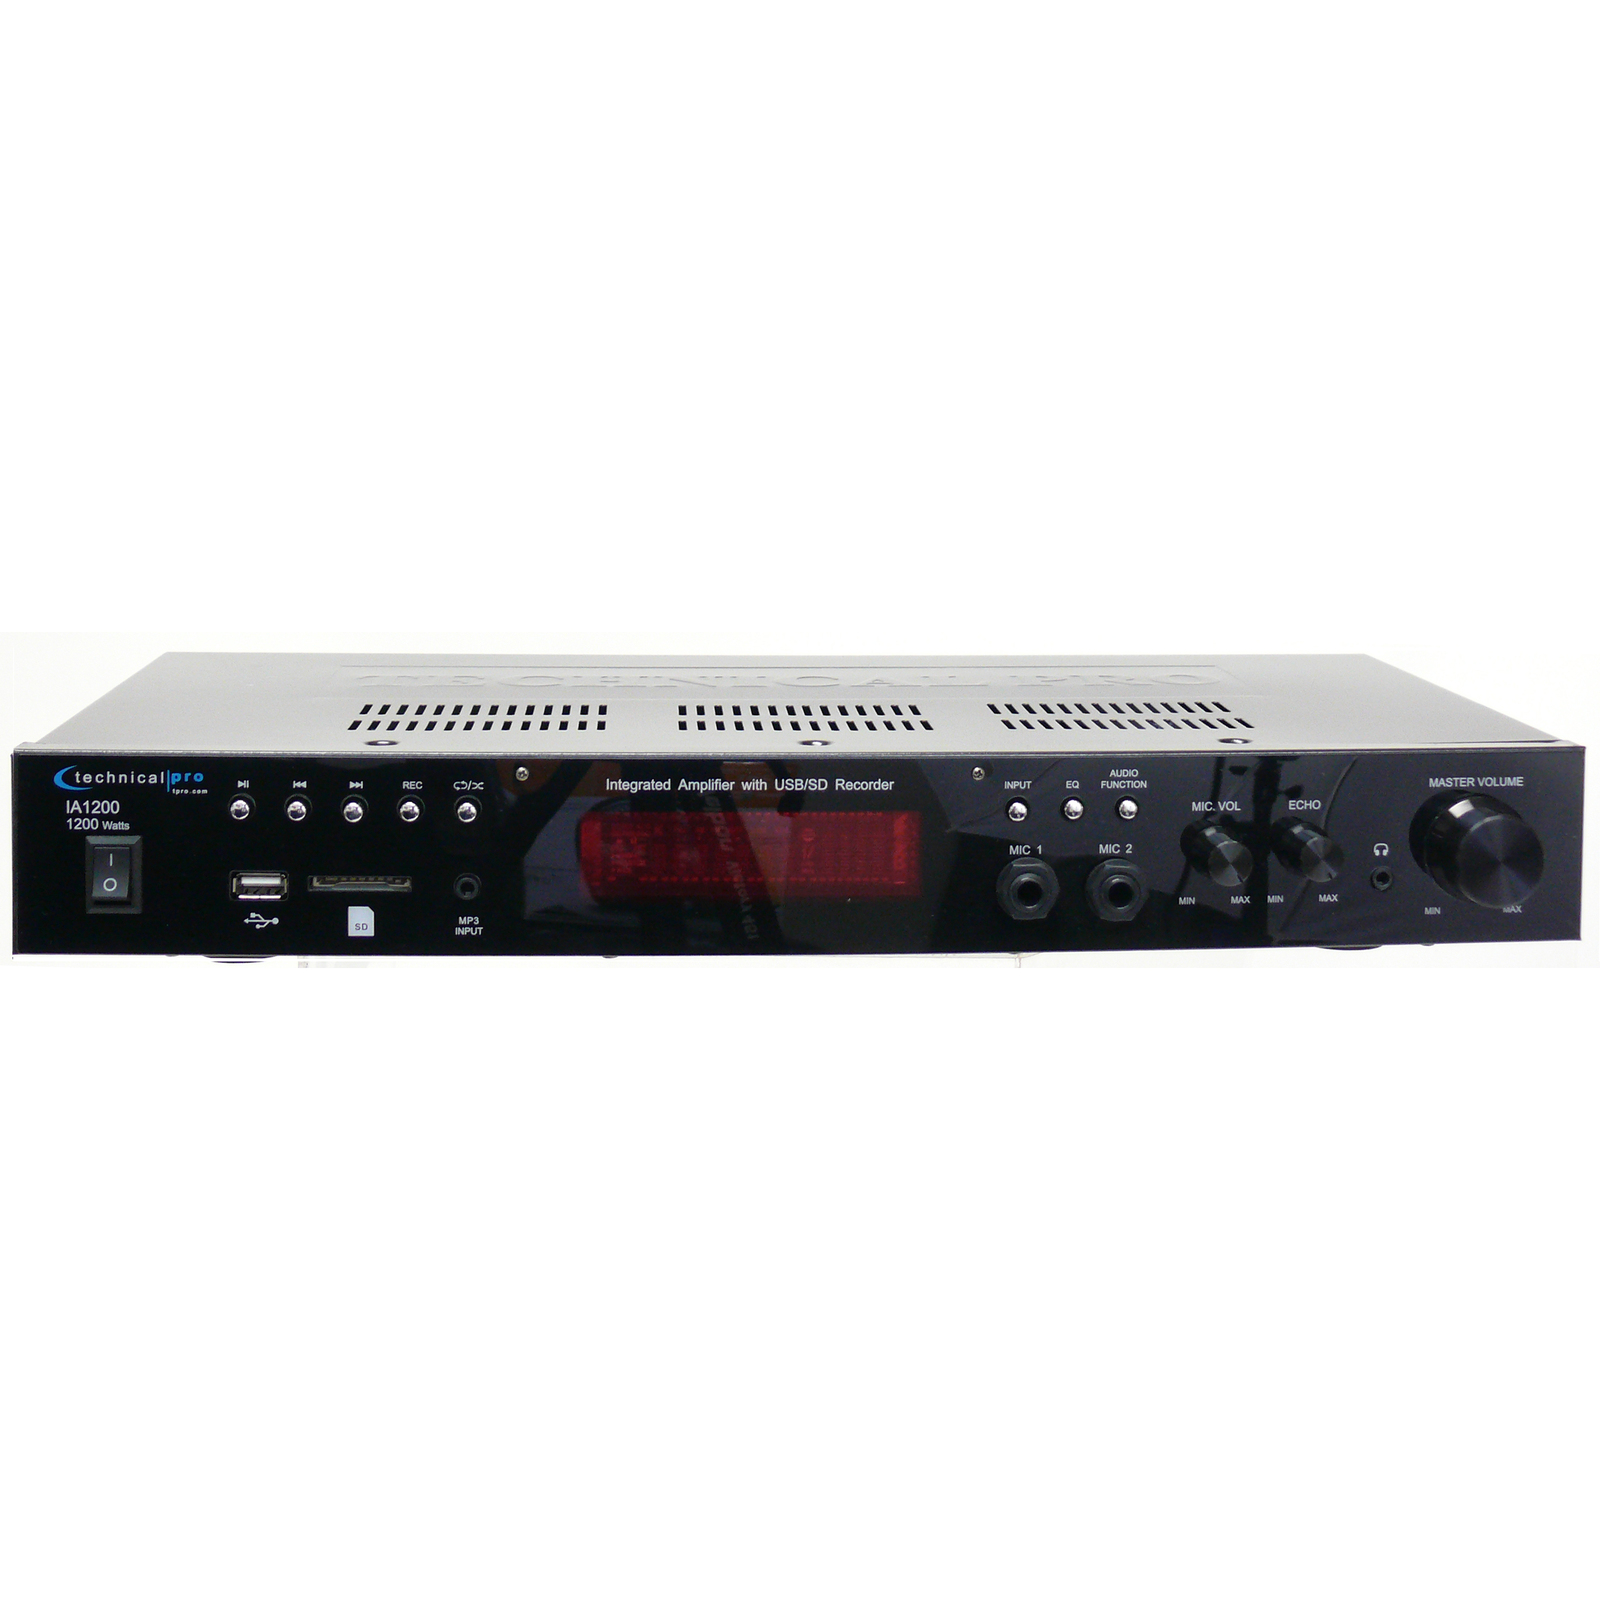 TPro 1200 Watts Integrated Amplifier w/ Dual mic inputs, volume and echo control